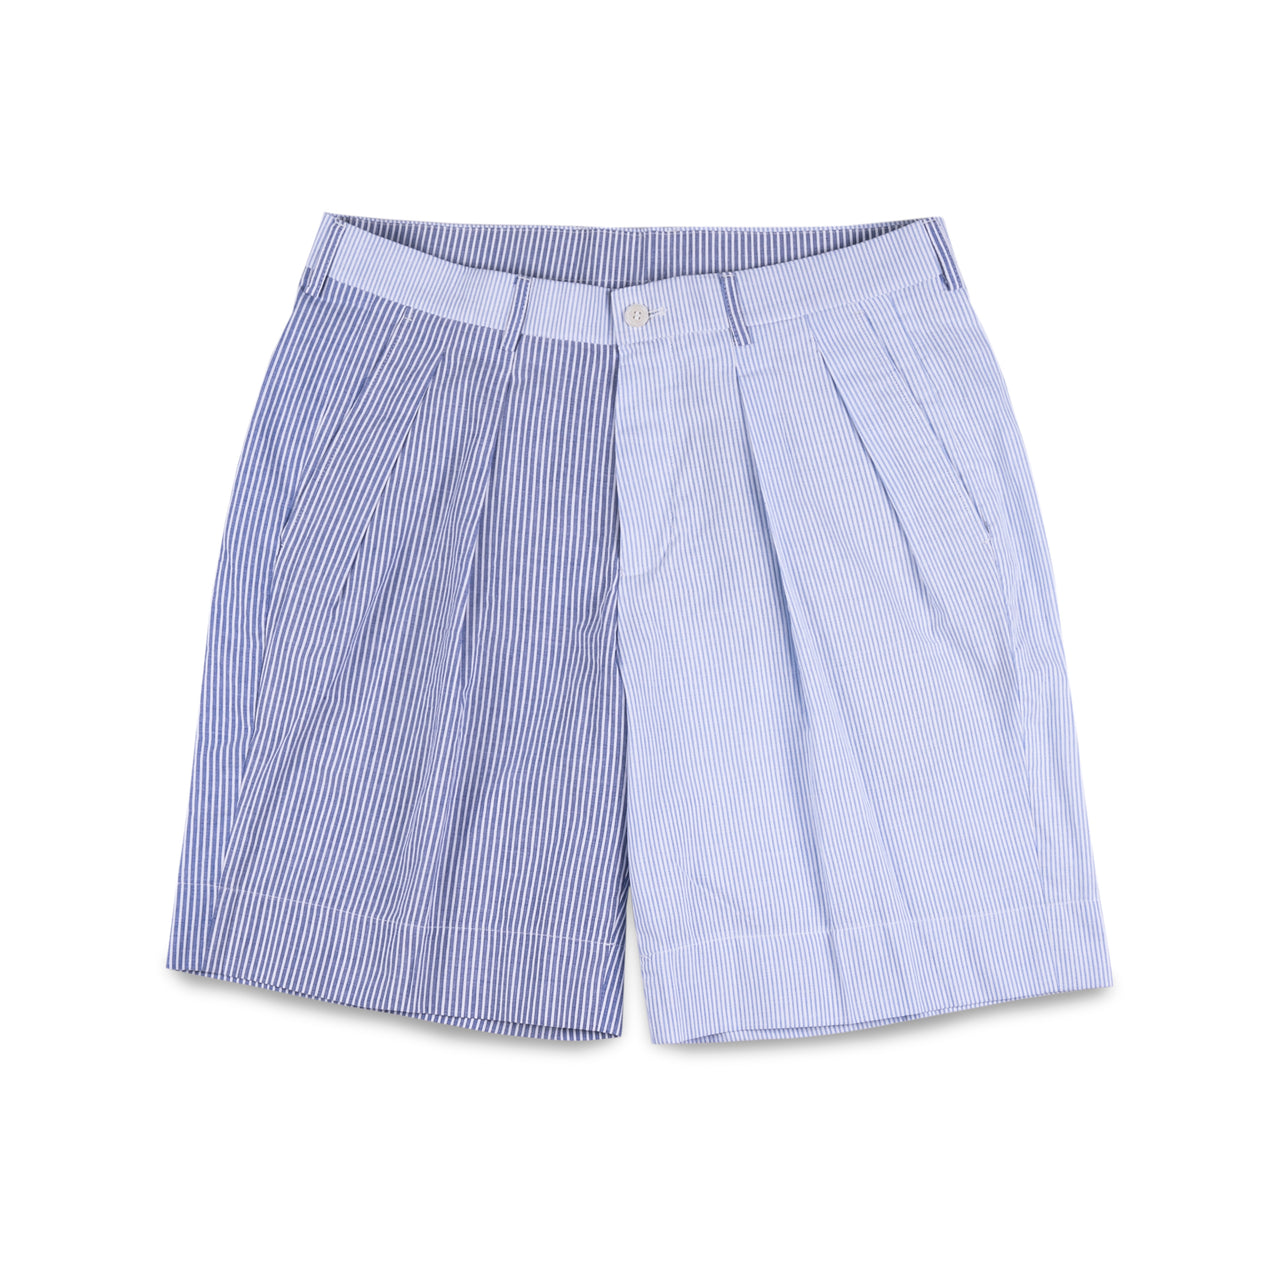 Jean Blue & Light Blue Striped Shorts